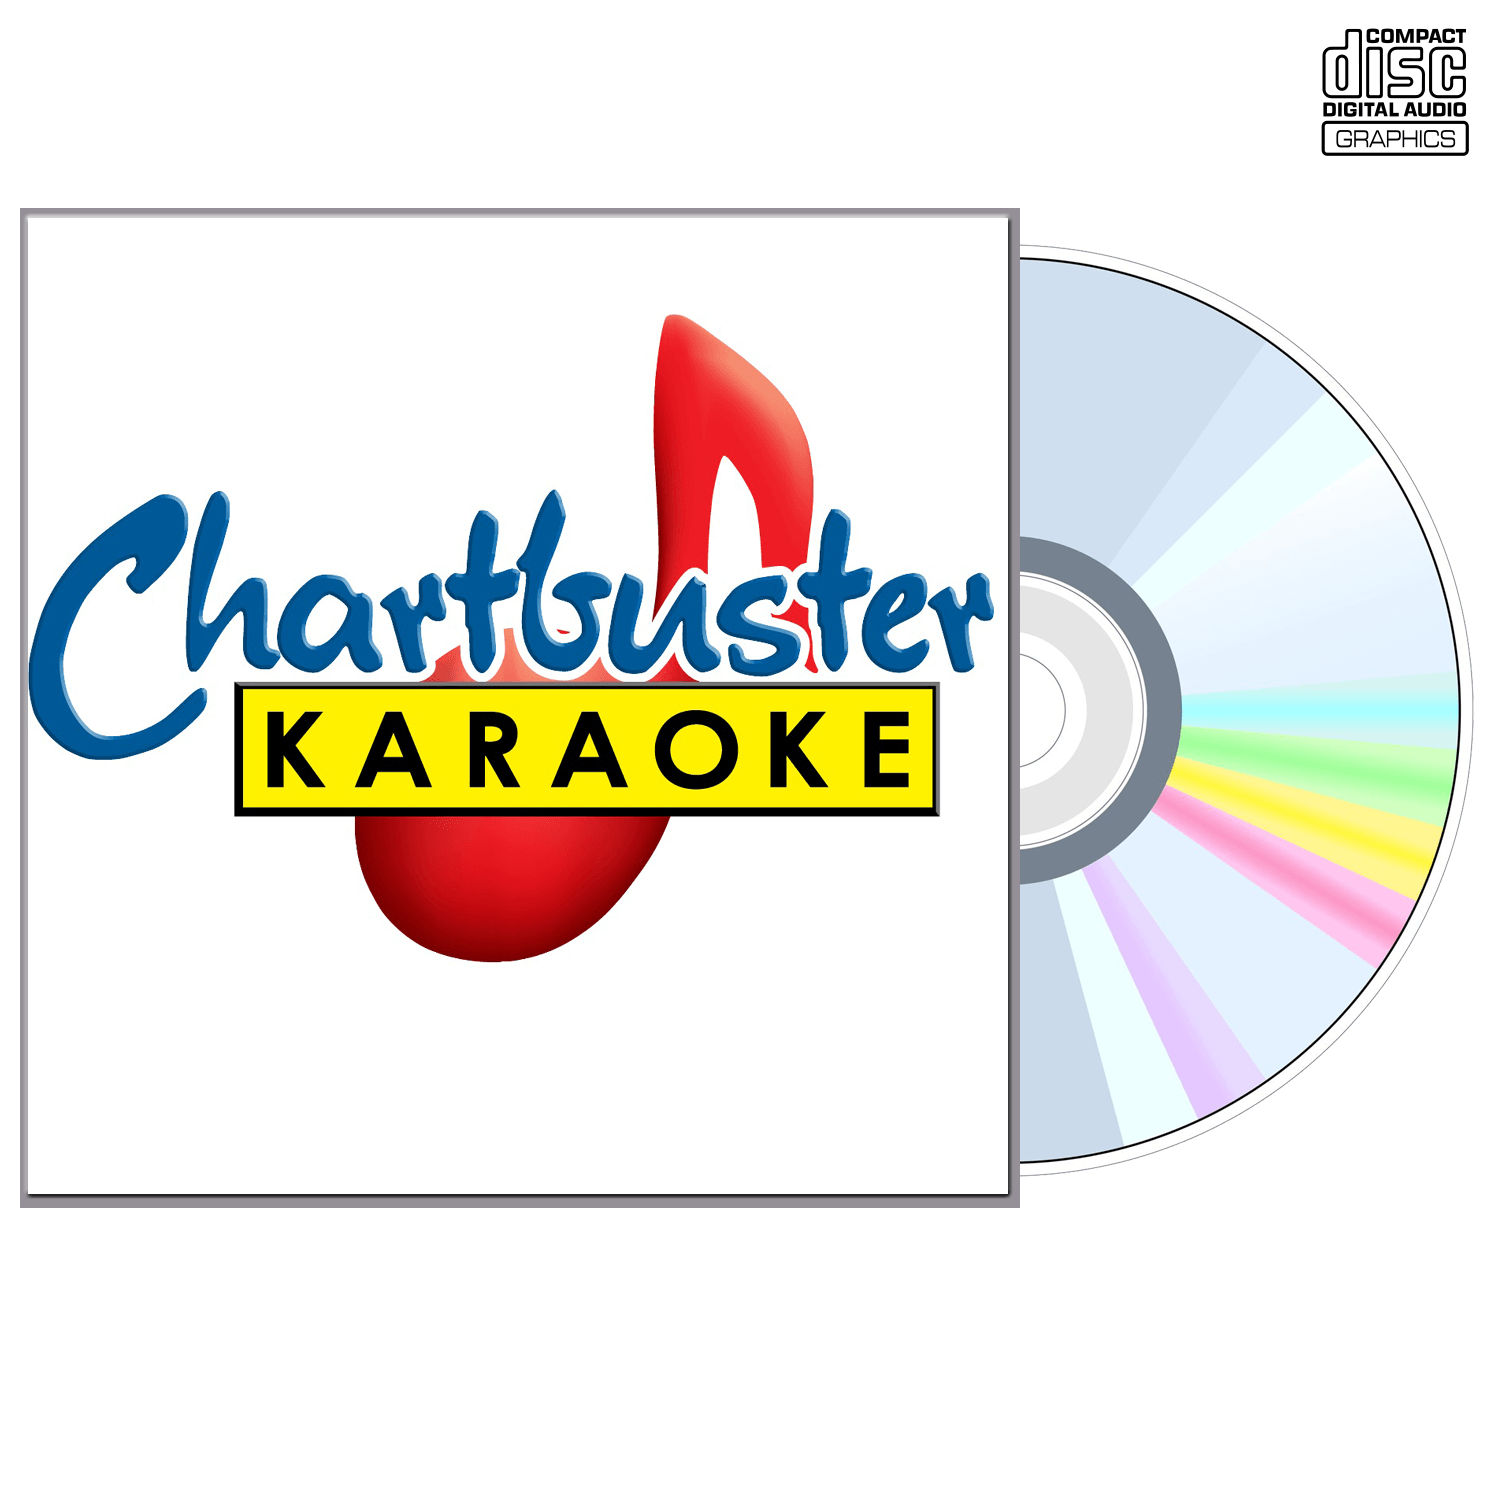 Will Smith - CD+G - Chartbuster Karaoke - Karaoke Home Entertainment